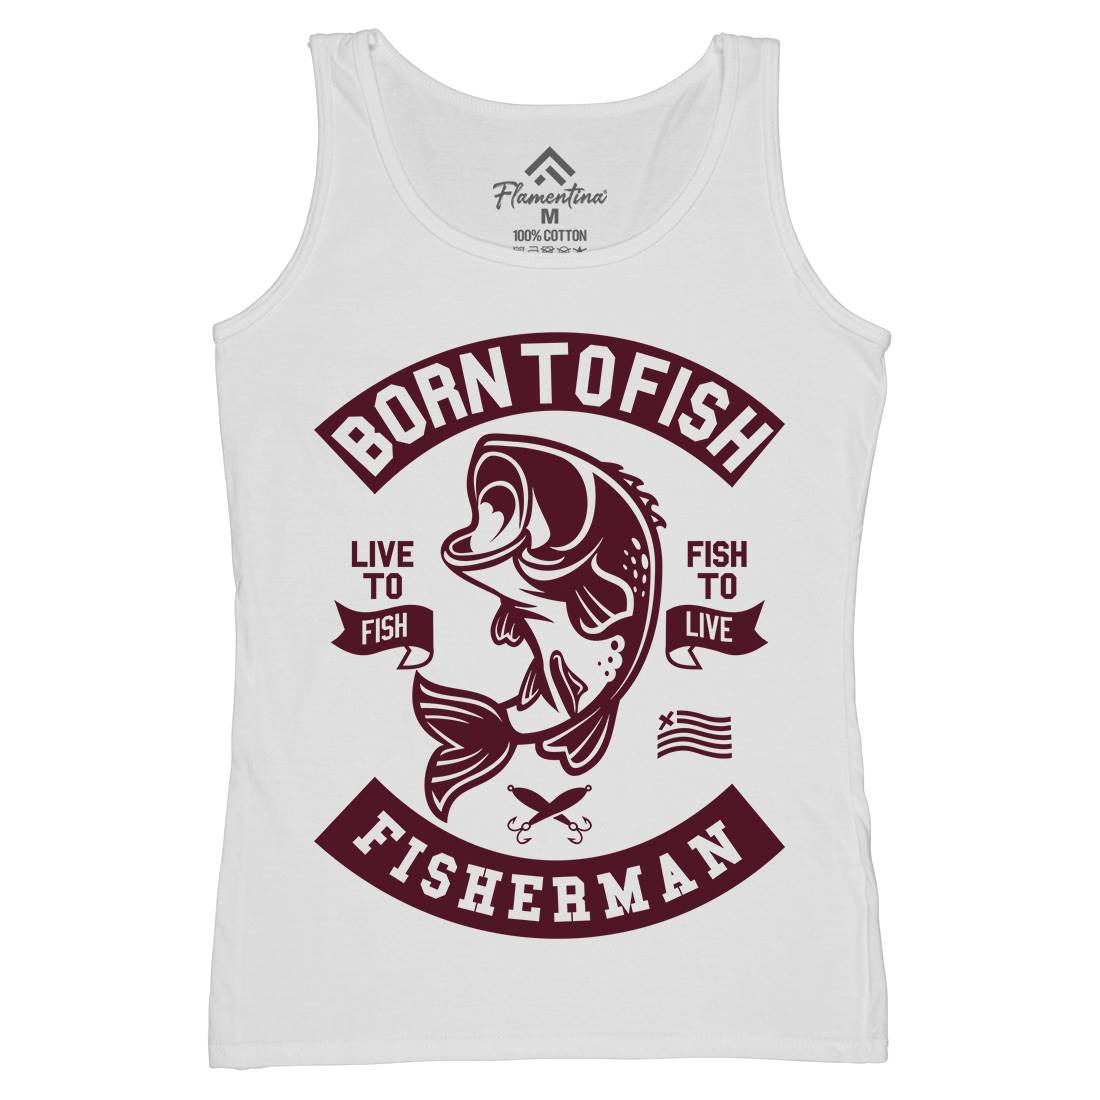 Born To Fish Womens Organic Tank Top Vest Fishing A208